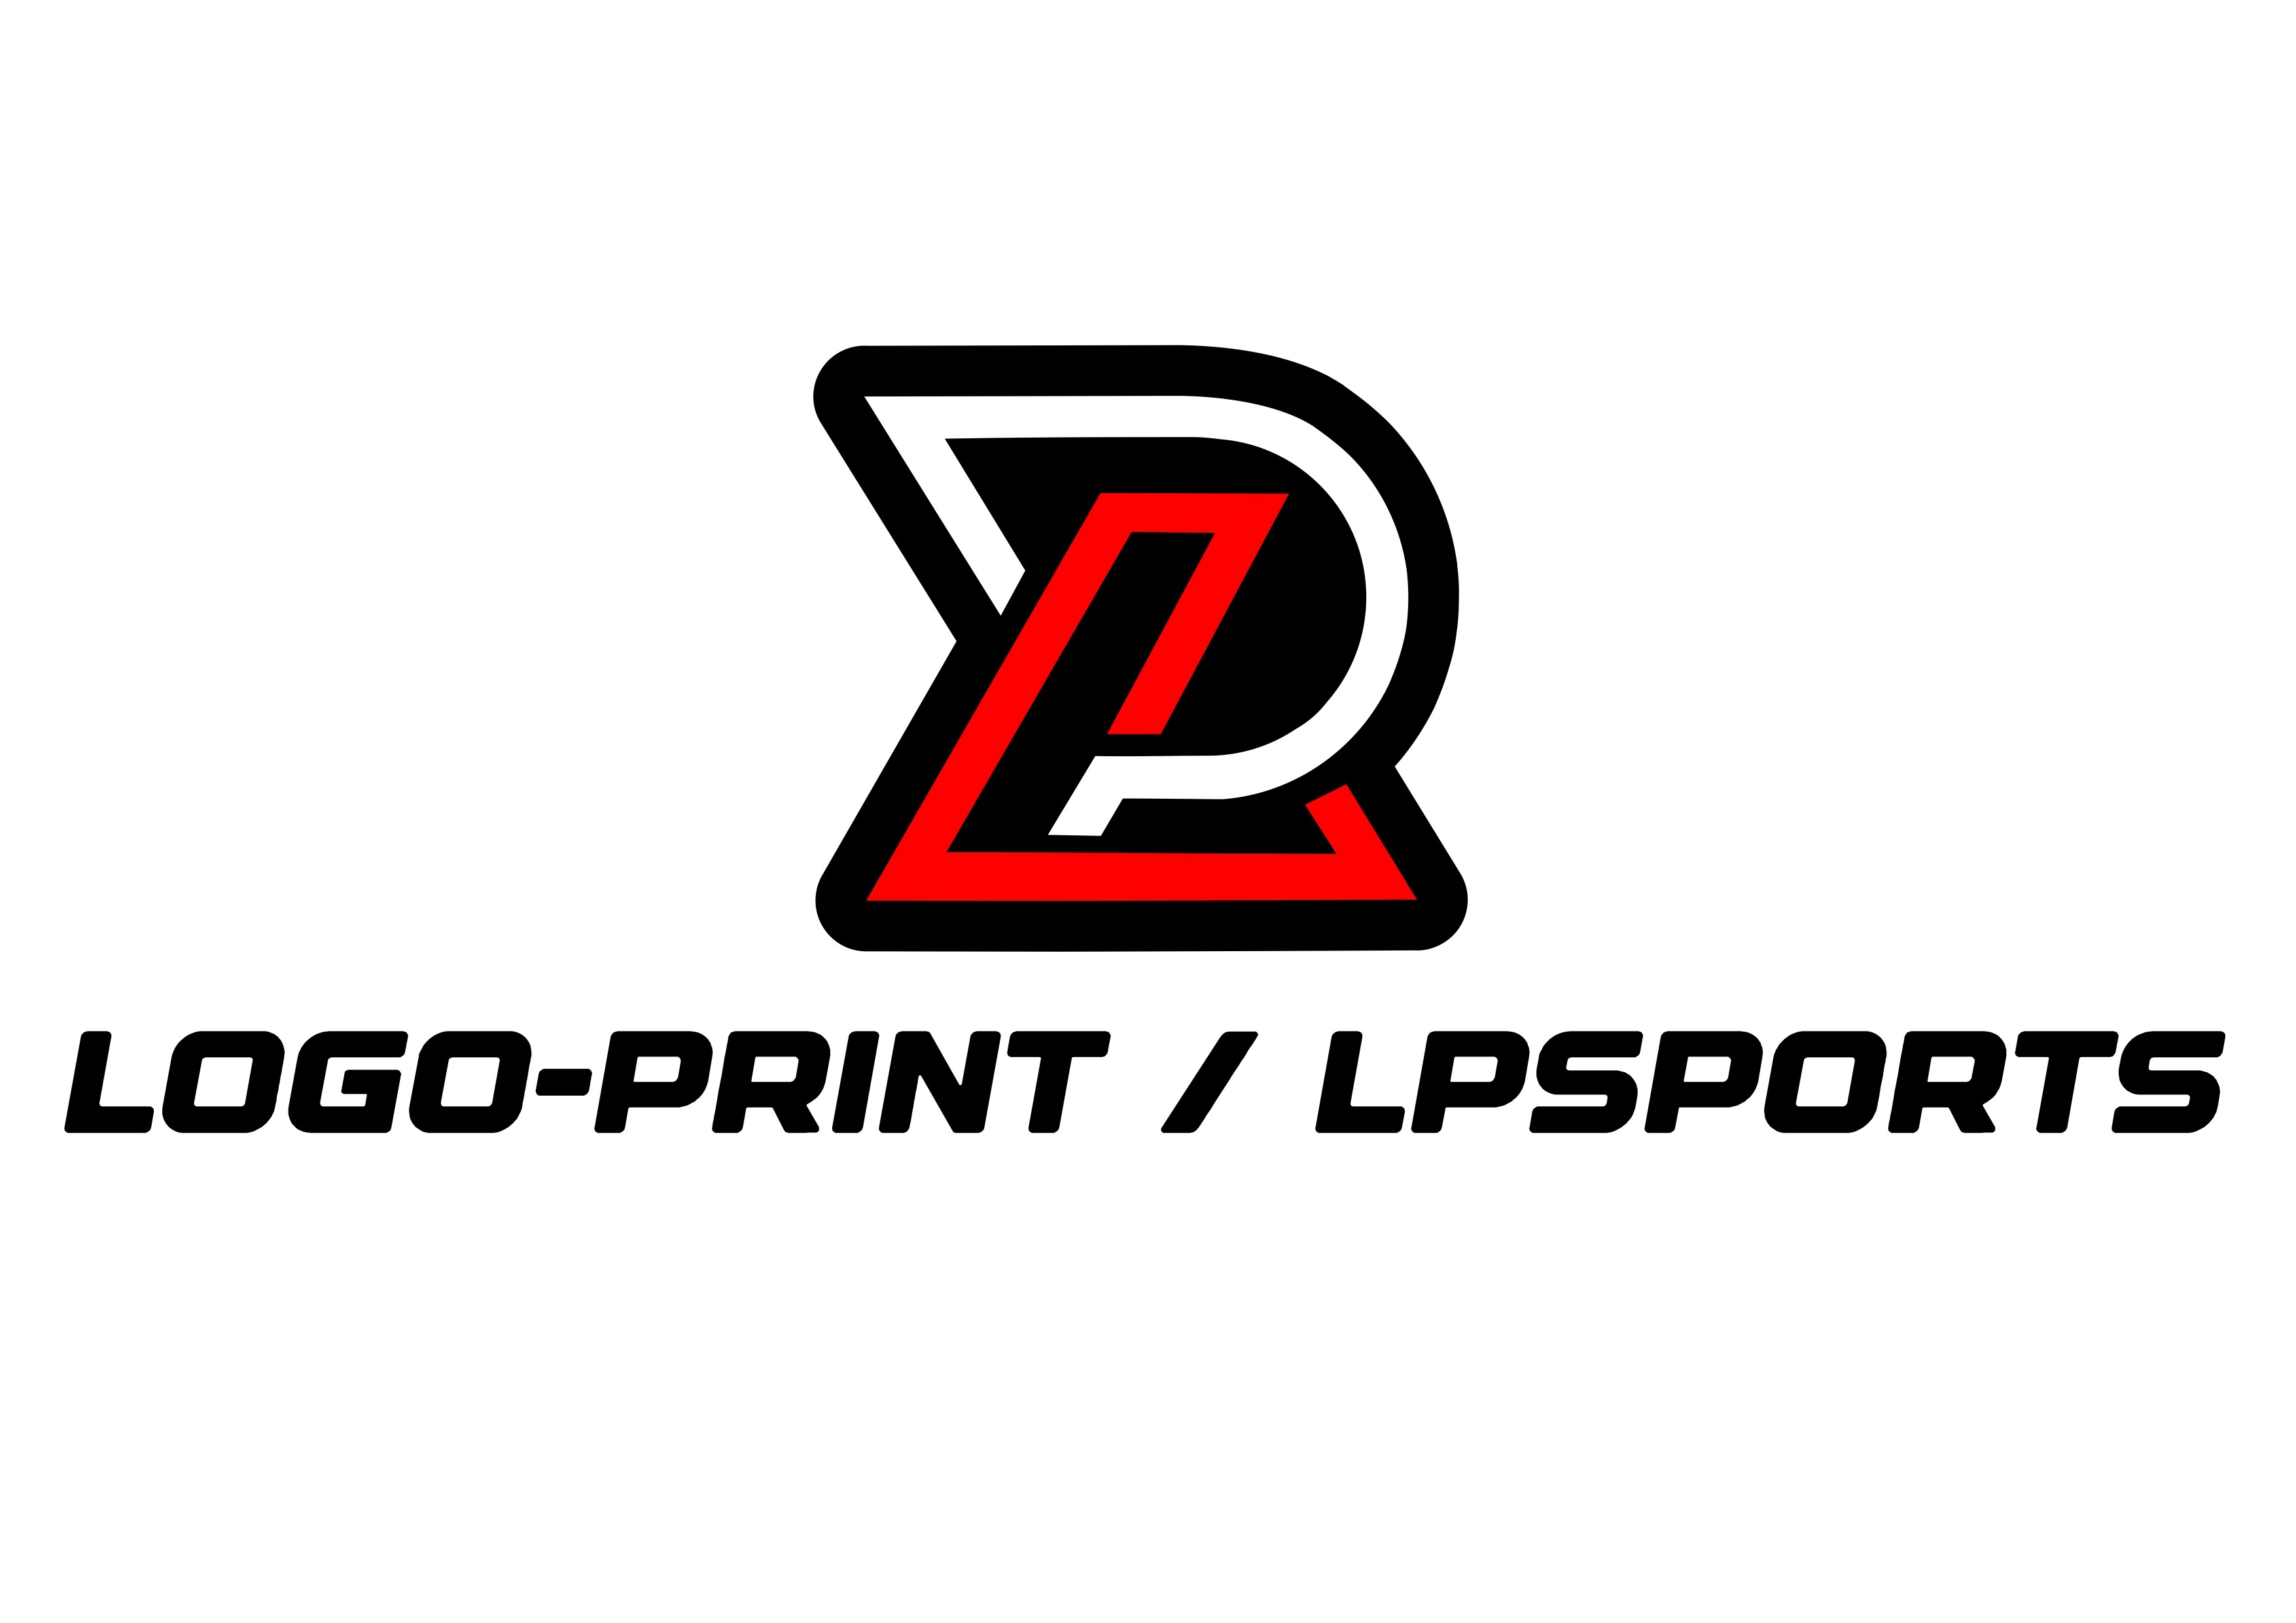 http://jurace.ch/images/upload/1713798473-lp sport logo-print.jpg